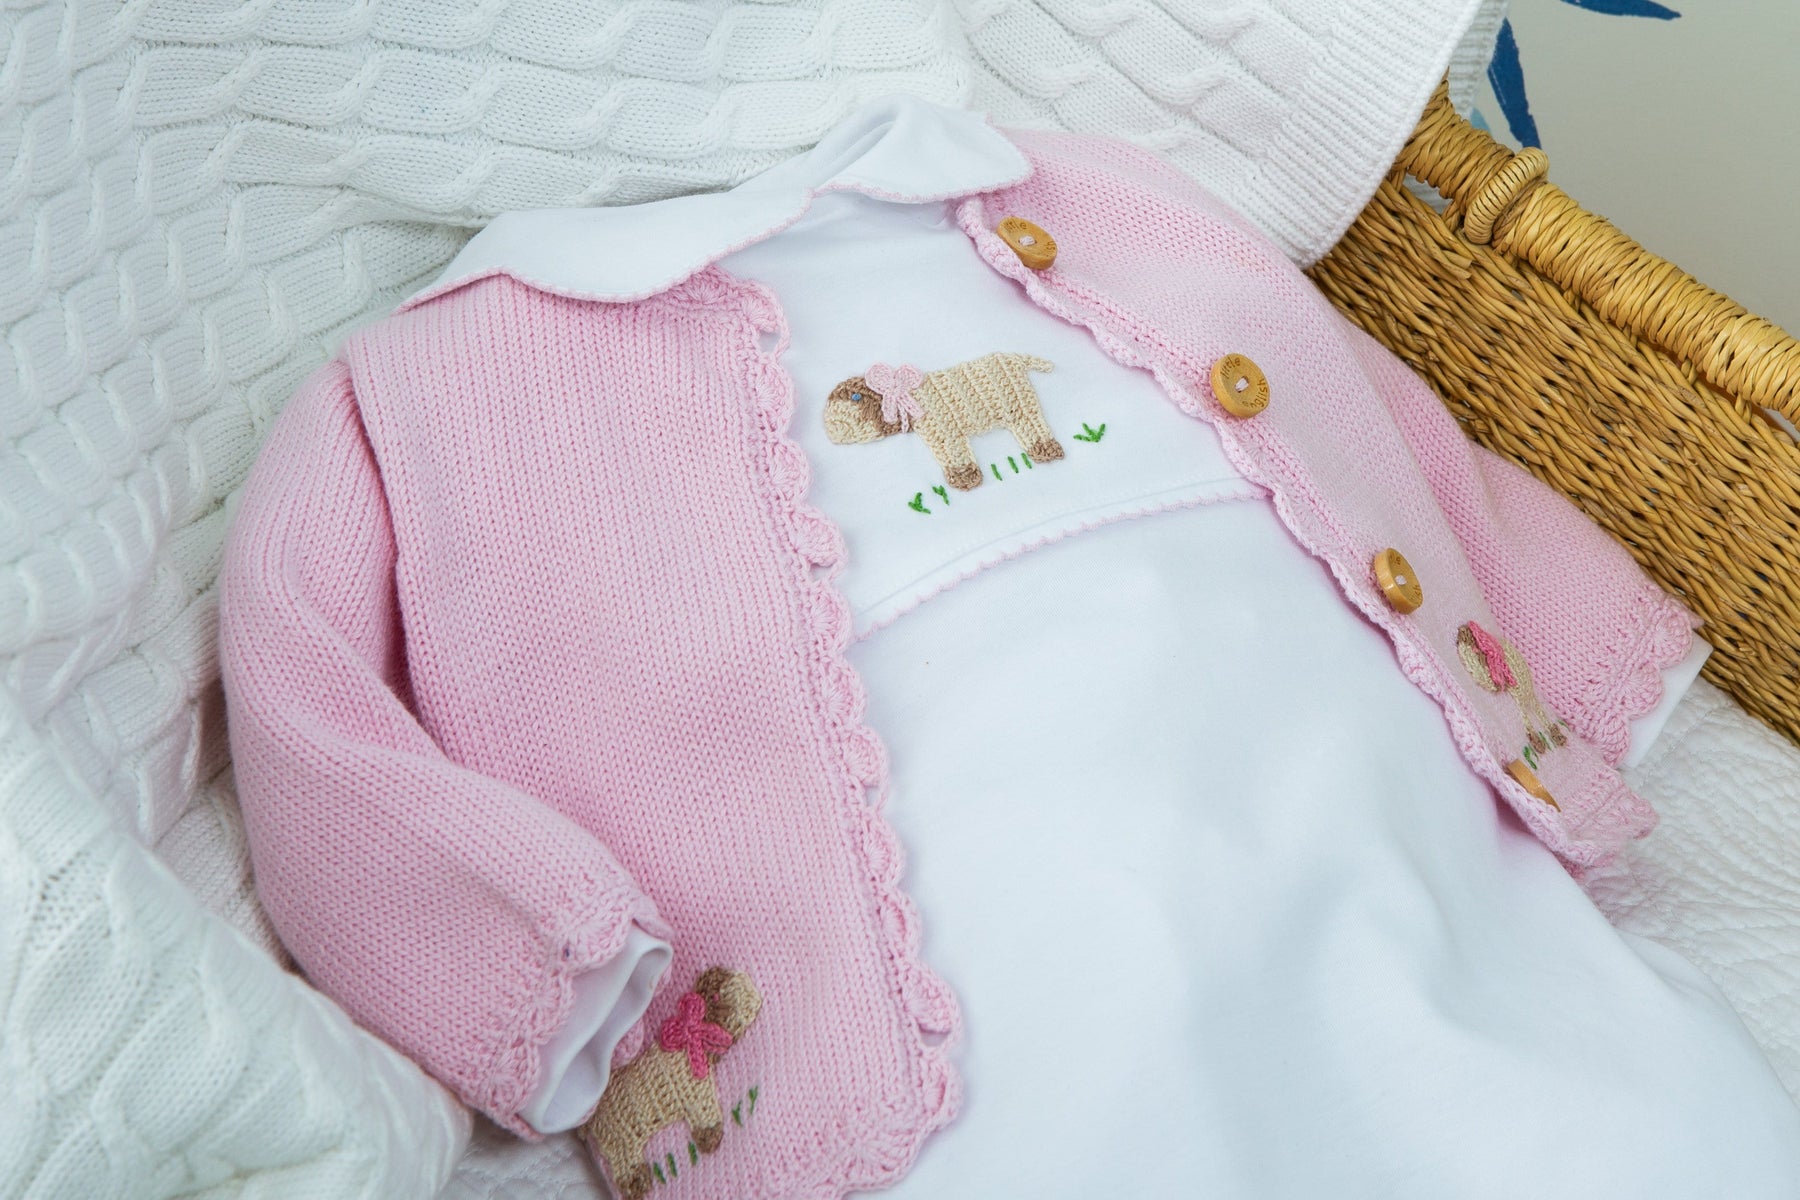 seguridadindustrialcr signature crochet playsuit for baby girl, traditional pink sheep crochet playsuit for baby girl